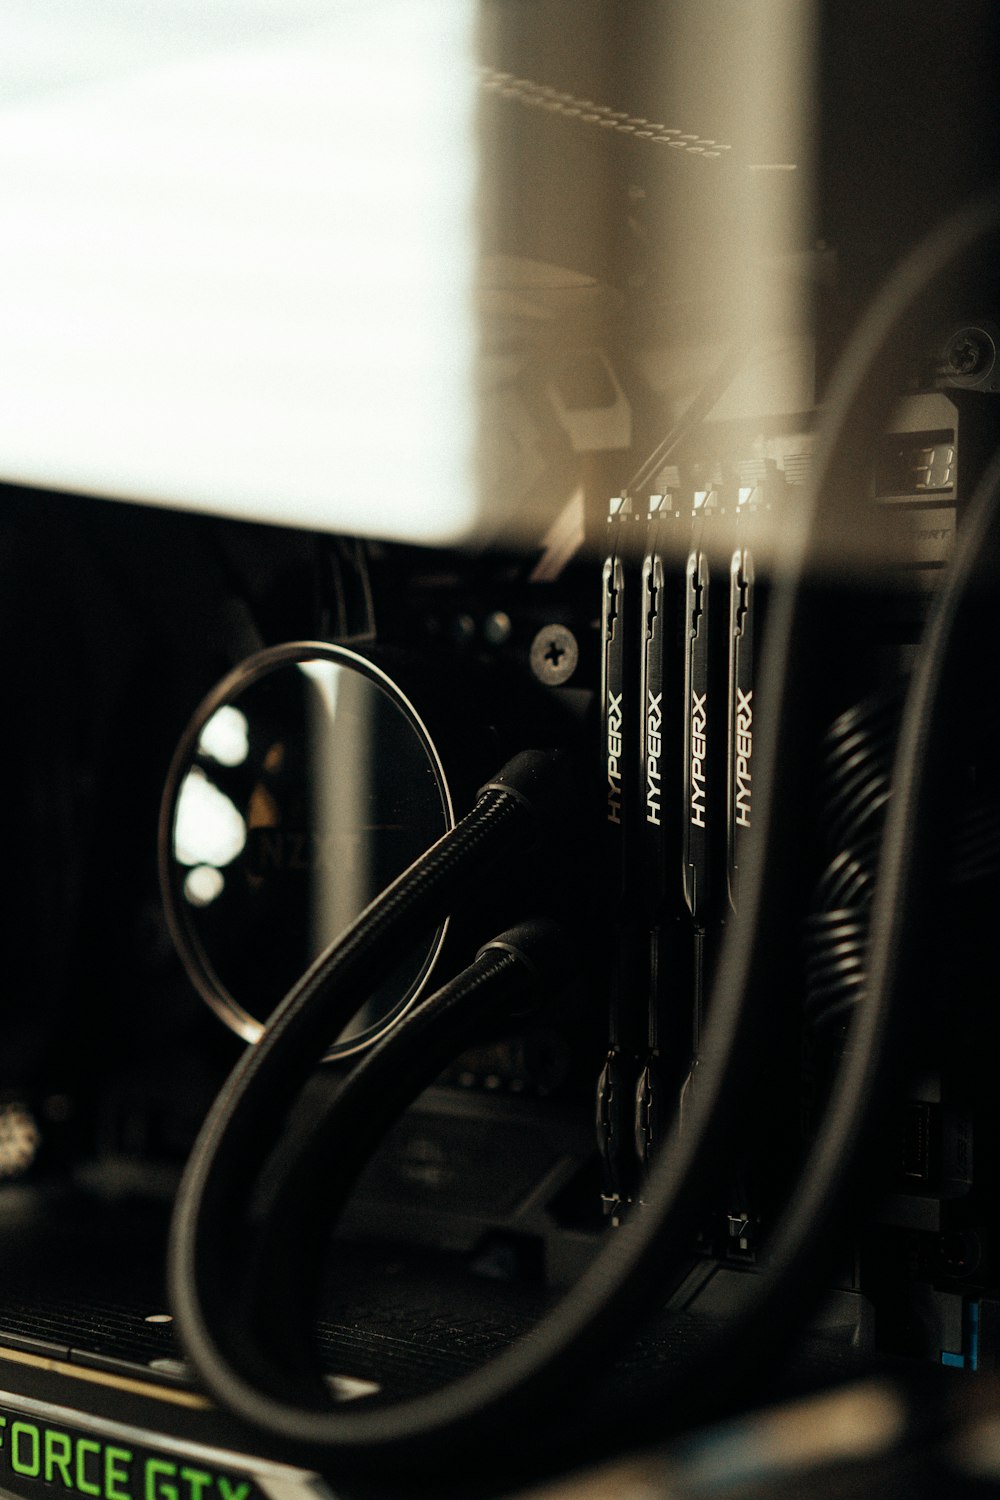 black and white car steering wheel